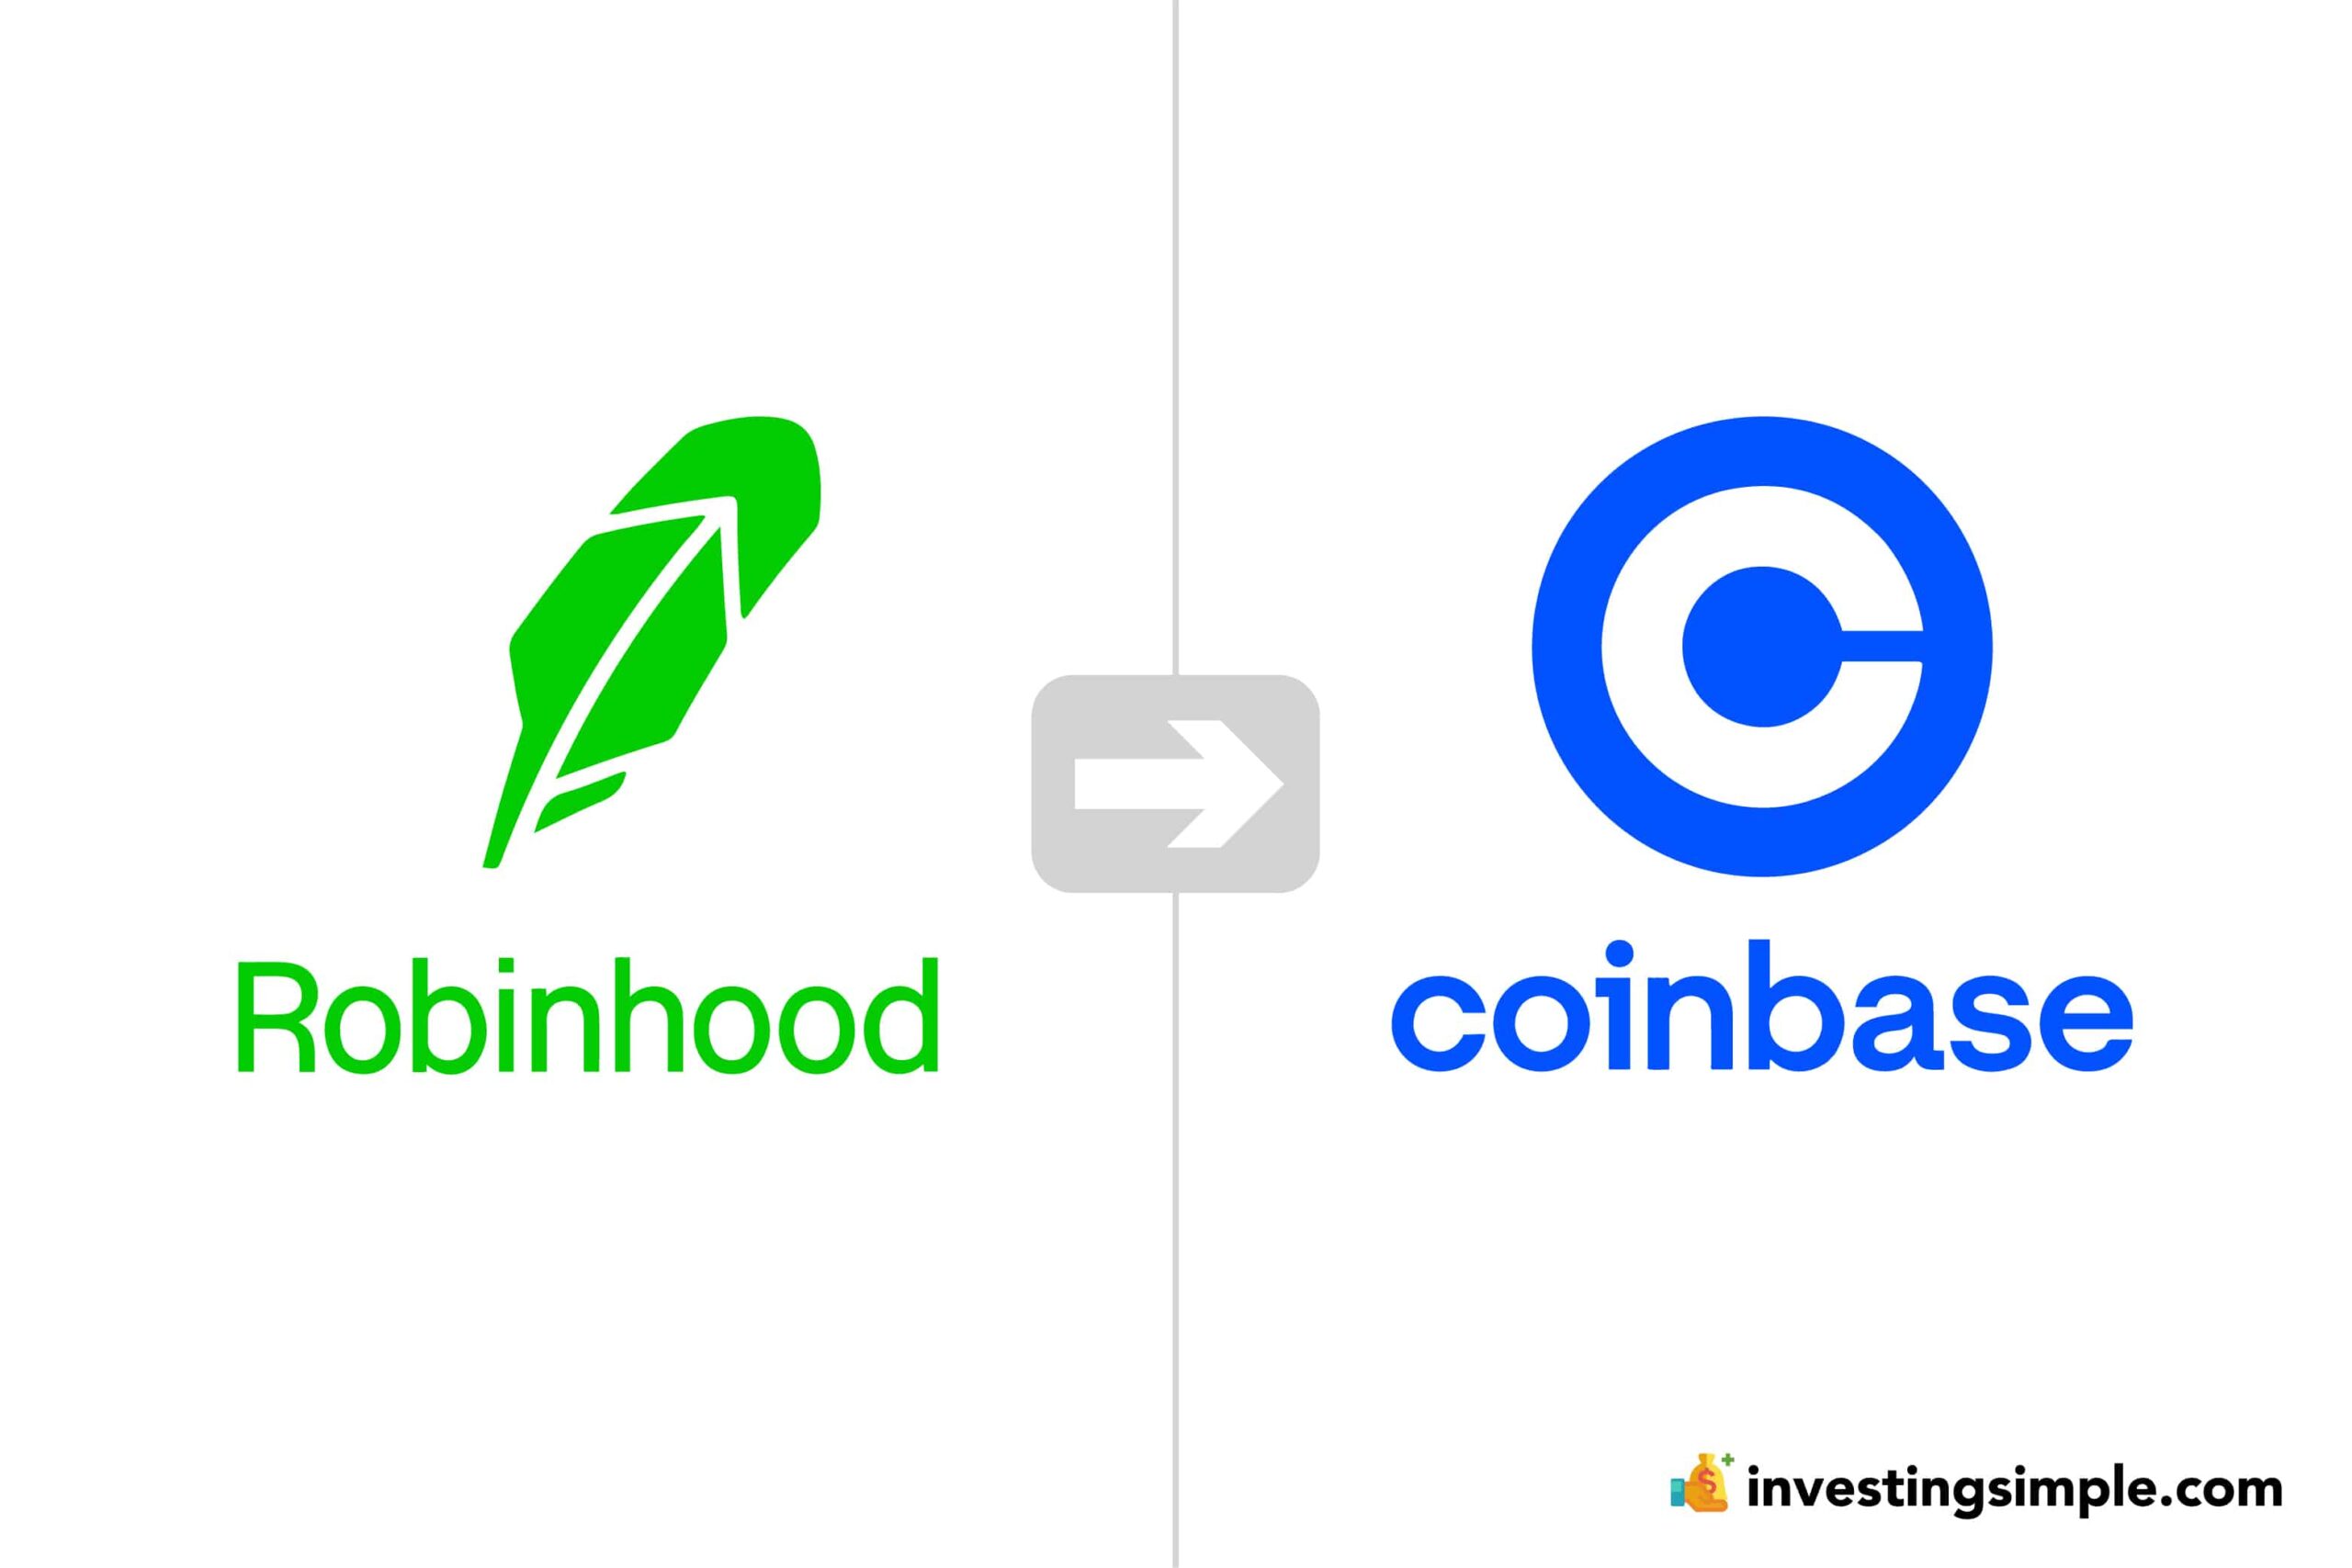 Coinbase vs. Robinhood: Which Should You Choose?